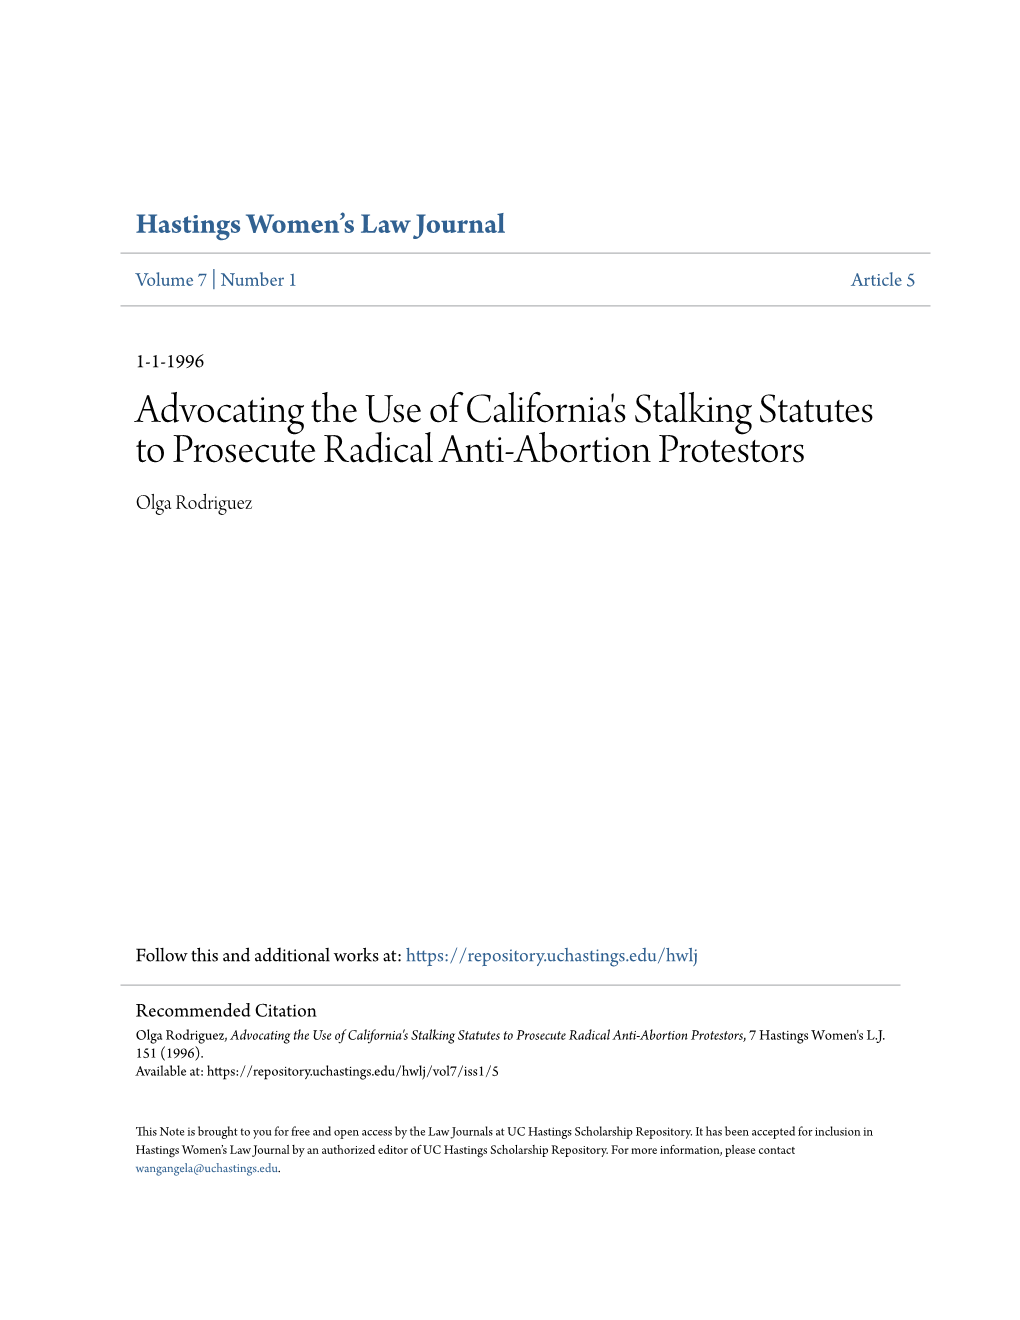 Advocating the Use of California's Stalking Statutes to Prosecute Radical Anti-Abortion Protestors Olga Rodriguez